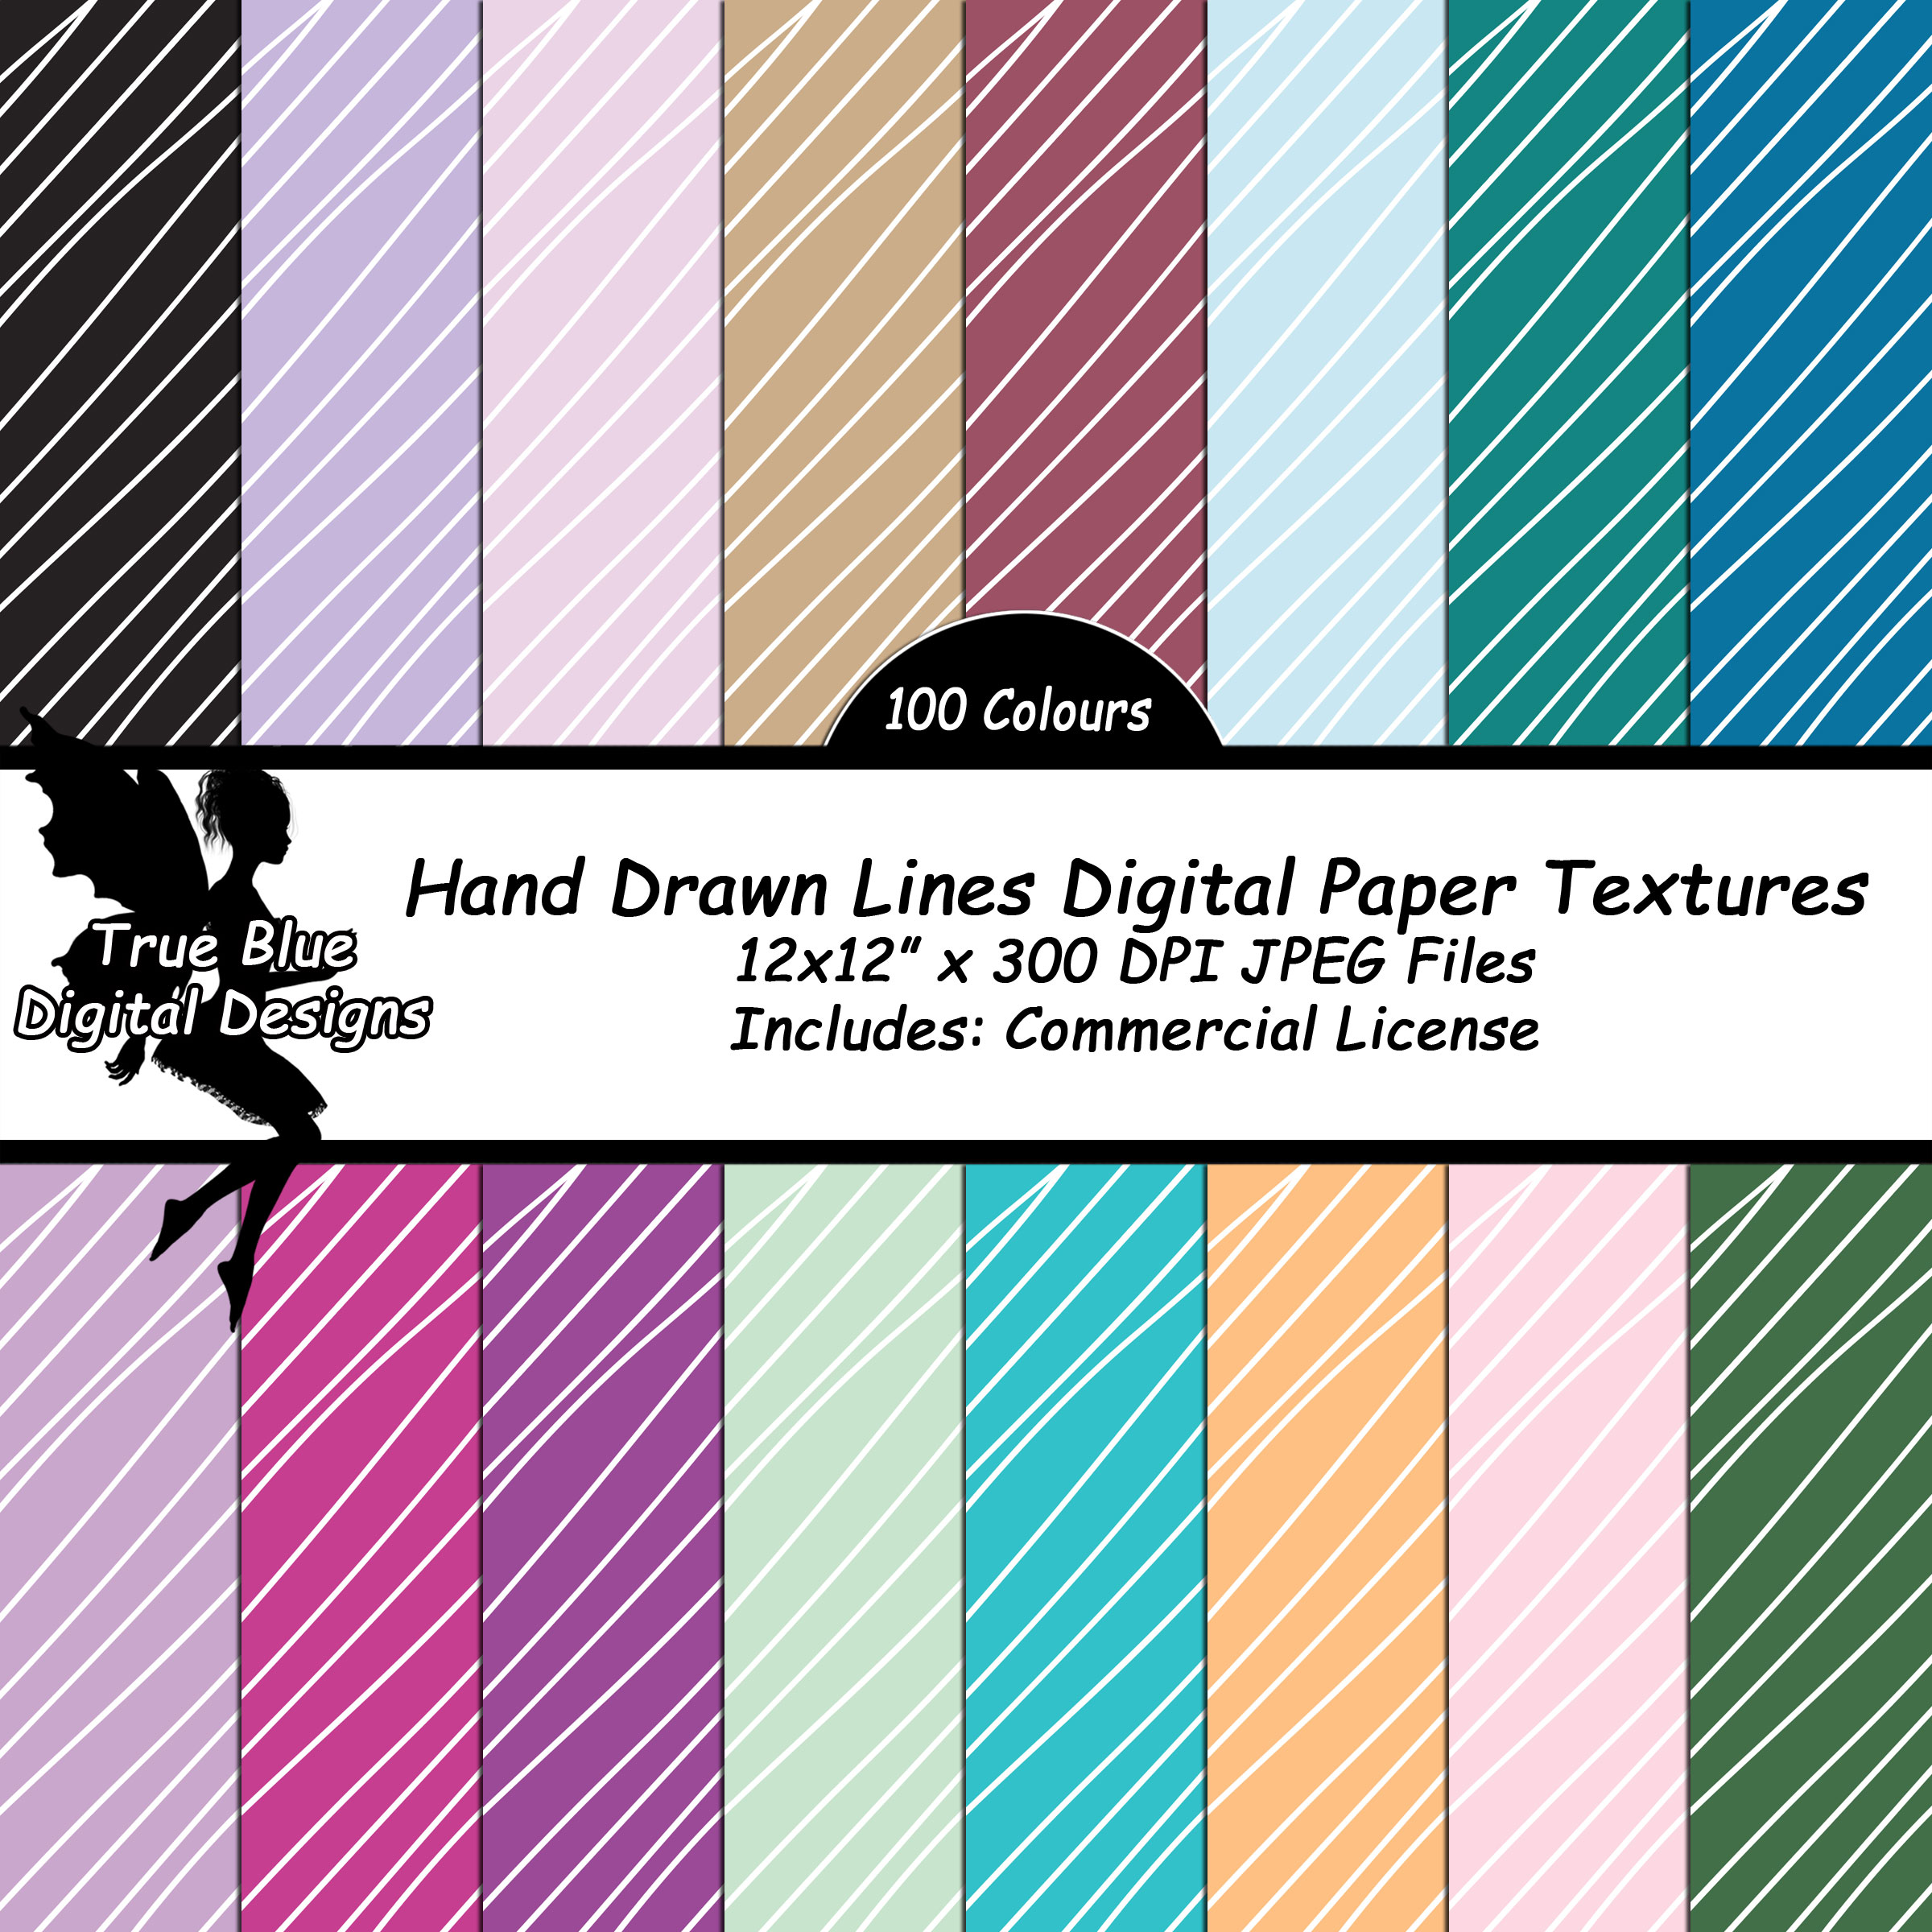 Hand Drawn Lines Digital Paper